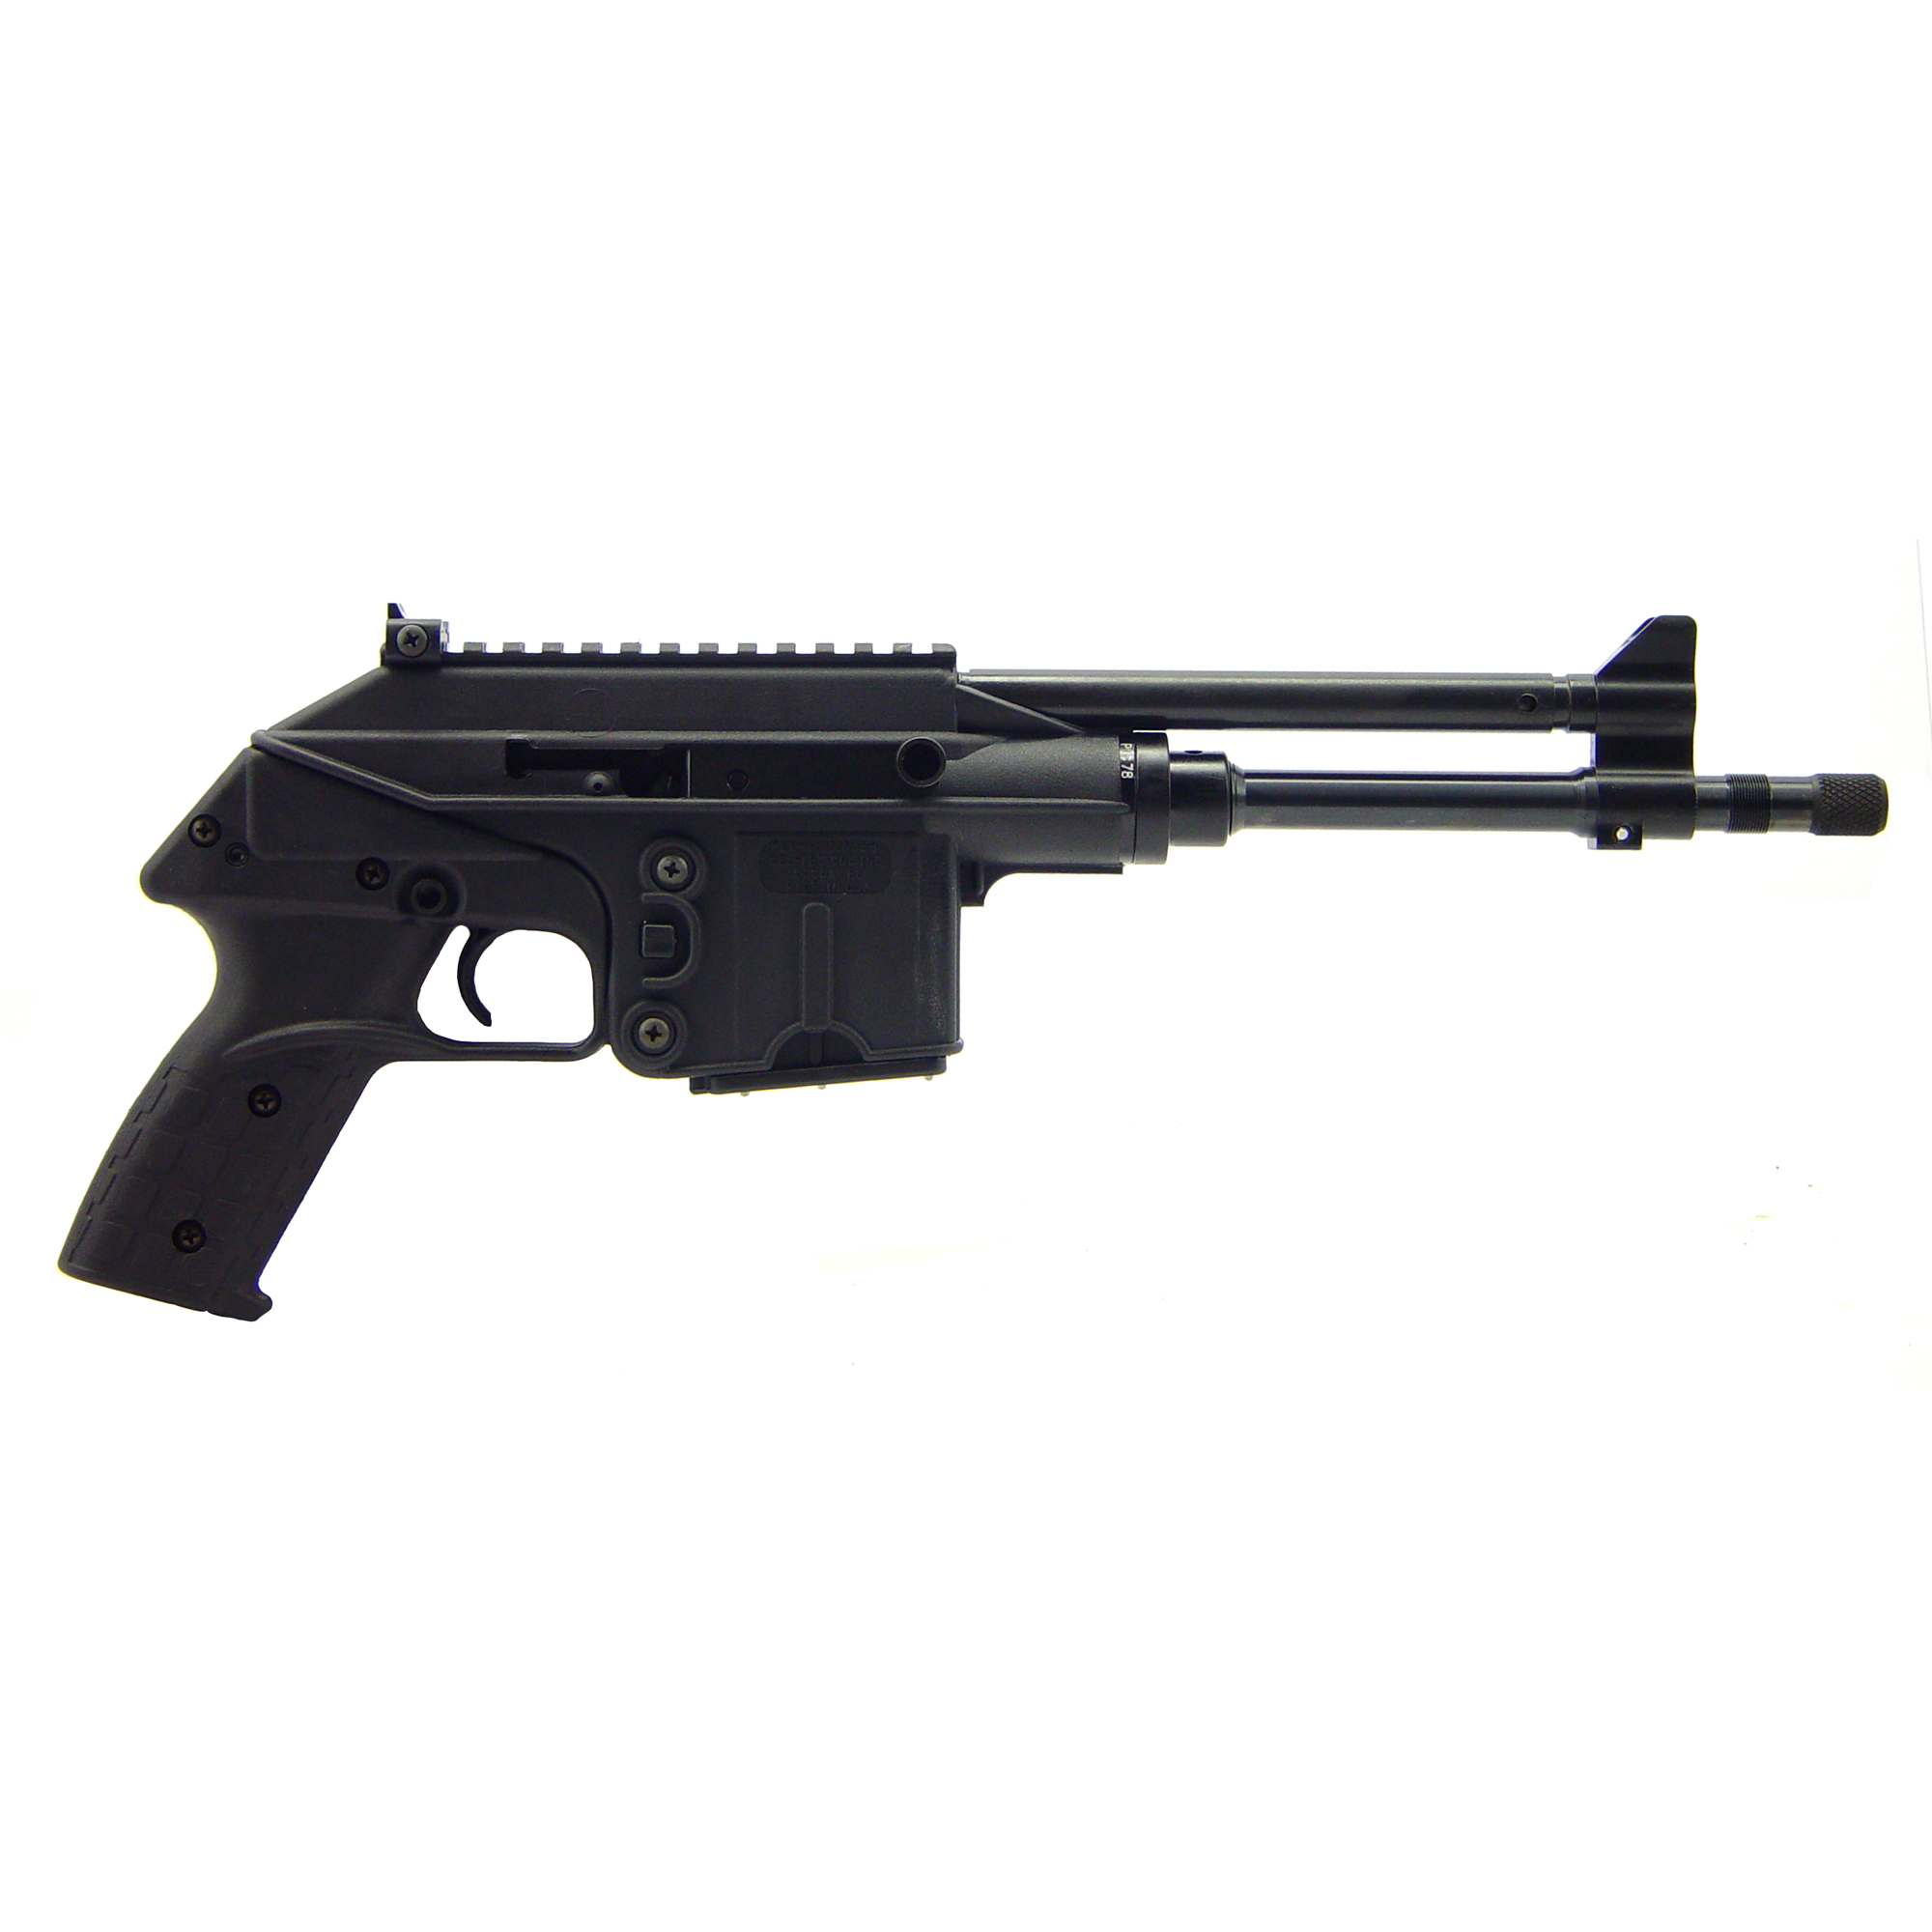 Kel-Tec, PLR-16, Pistol, With Handgaurd, Semi-automatic, 223 Remington/556 NATO, 9.2" Barrel, Polymer, Black, Adjustable Sights, 10 Rounds, 1 Magazine